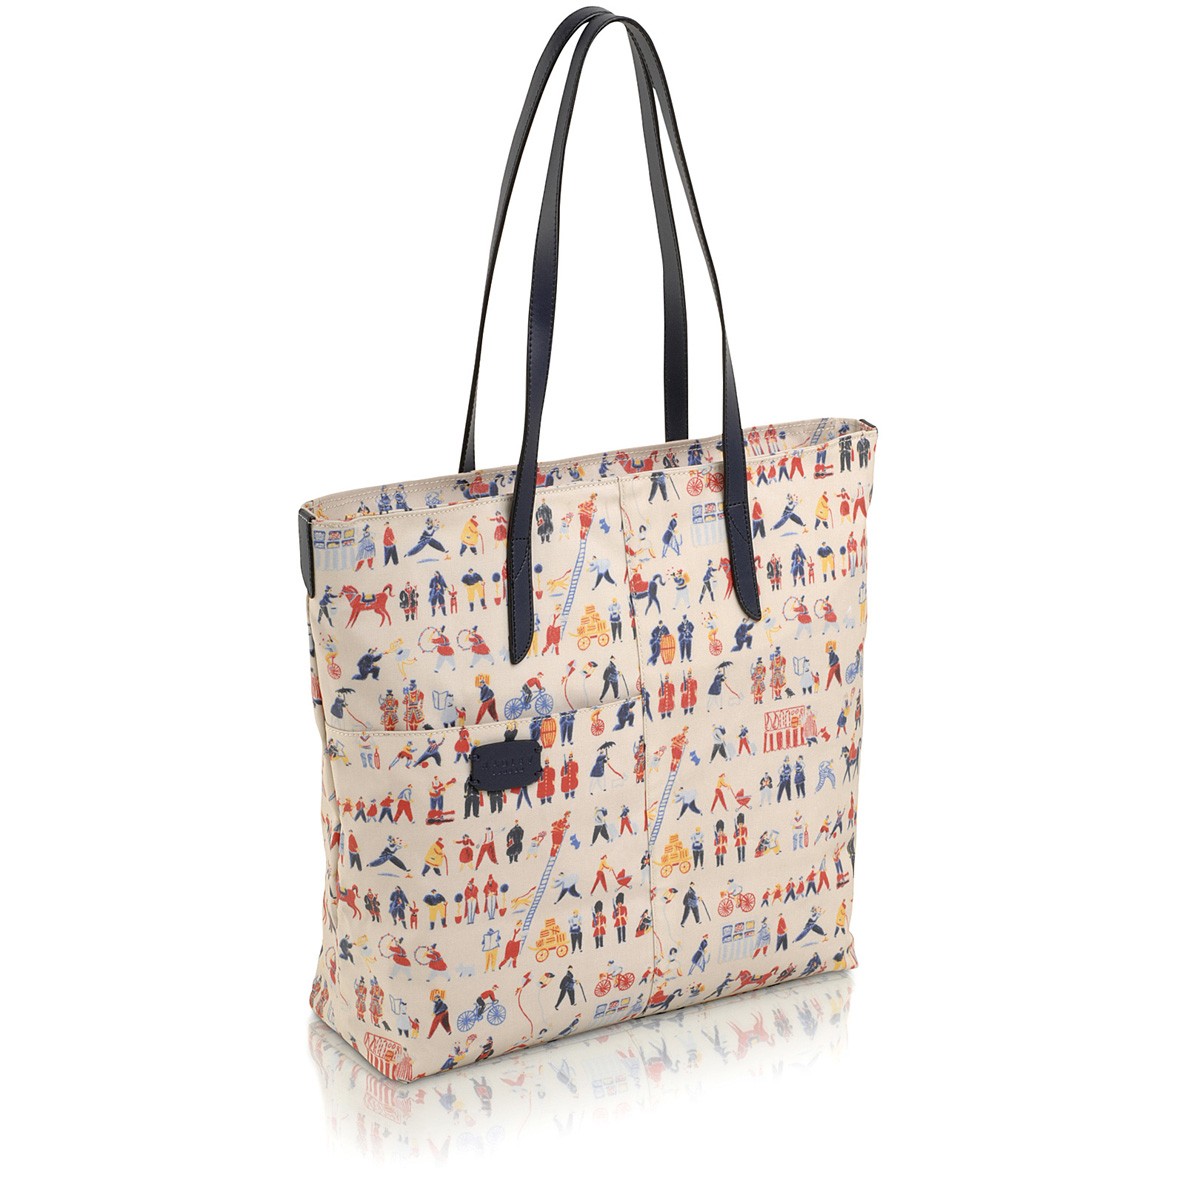 Radley Streets of London - Radley's latest bag and accessories range